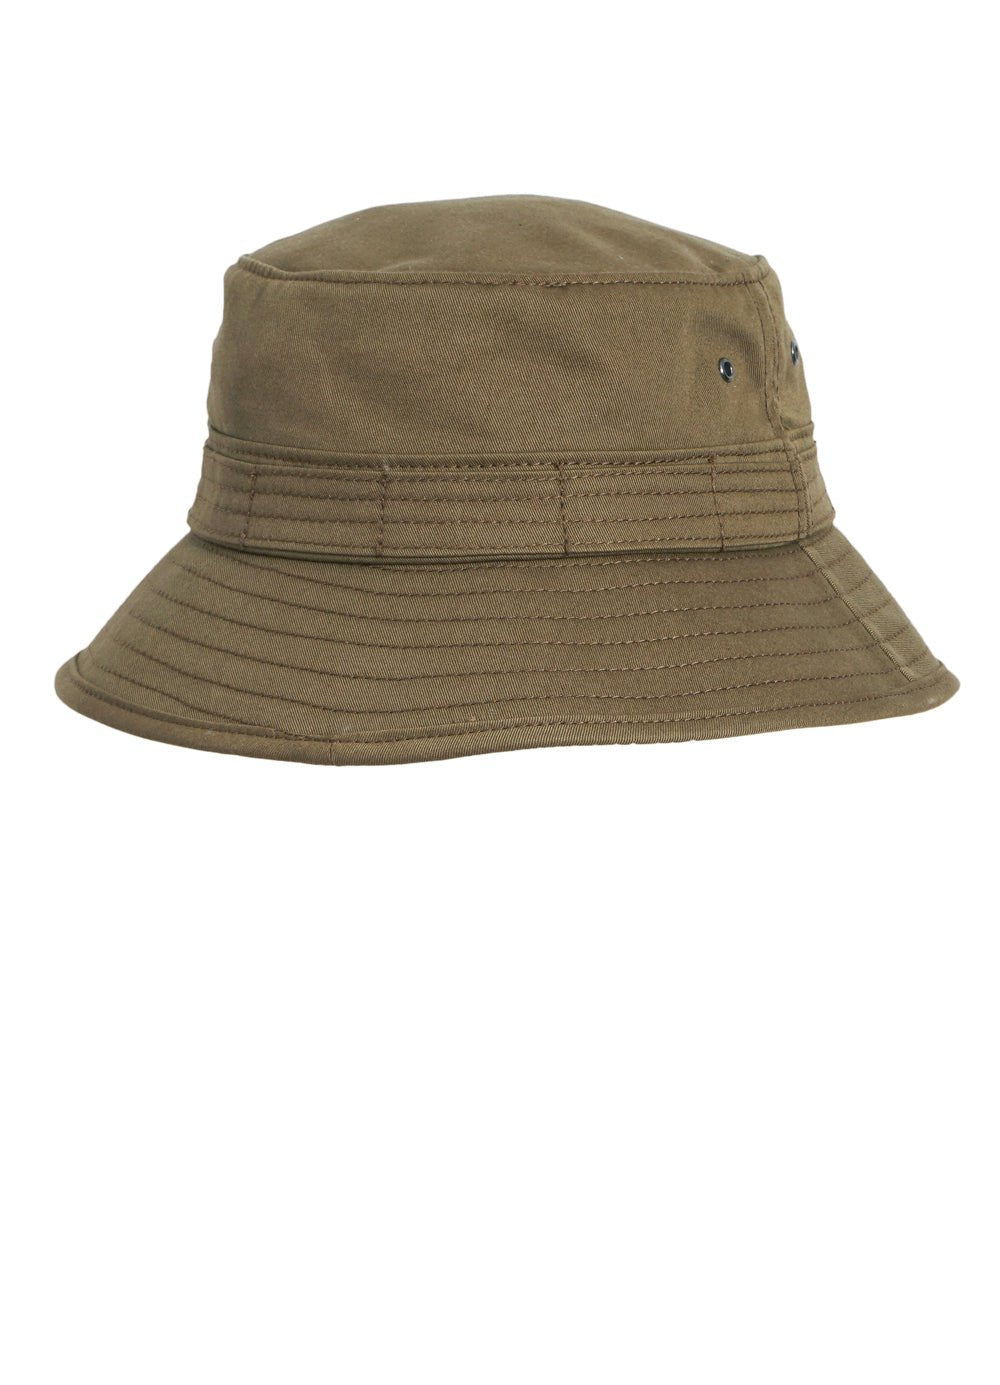 HANSEN GARMENTS - EDVARD | Bucket Hat | Army - HANSEN Garments